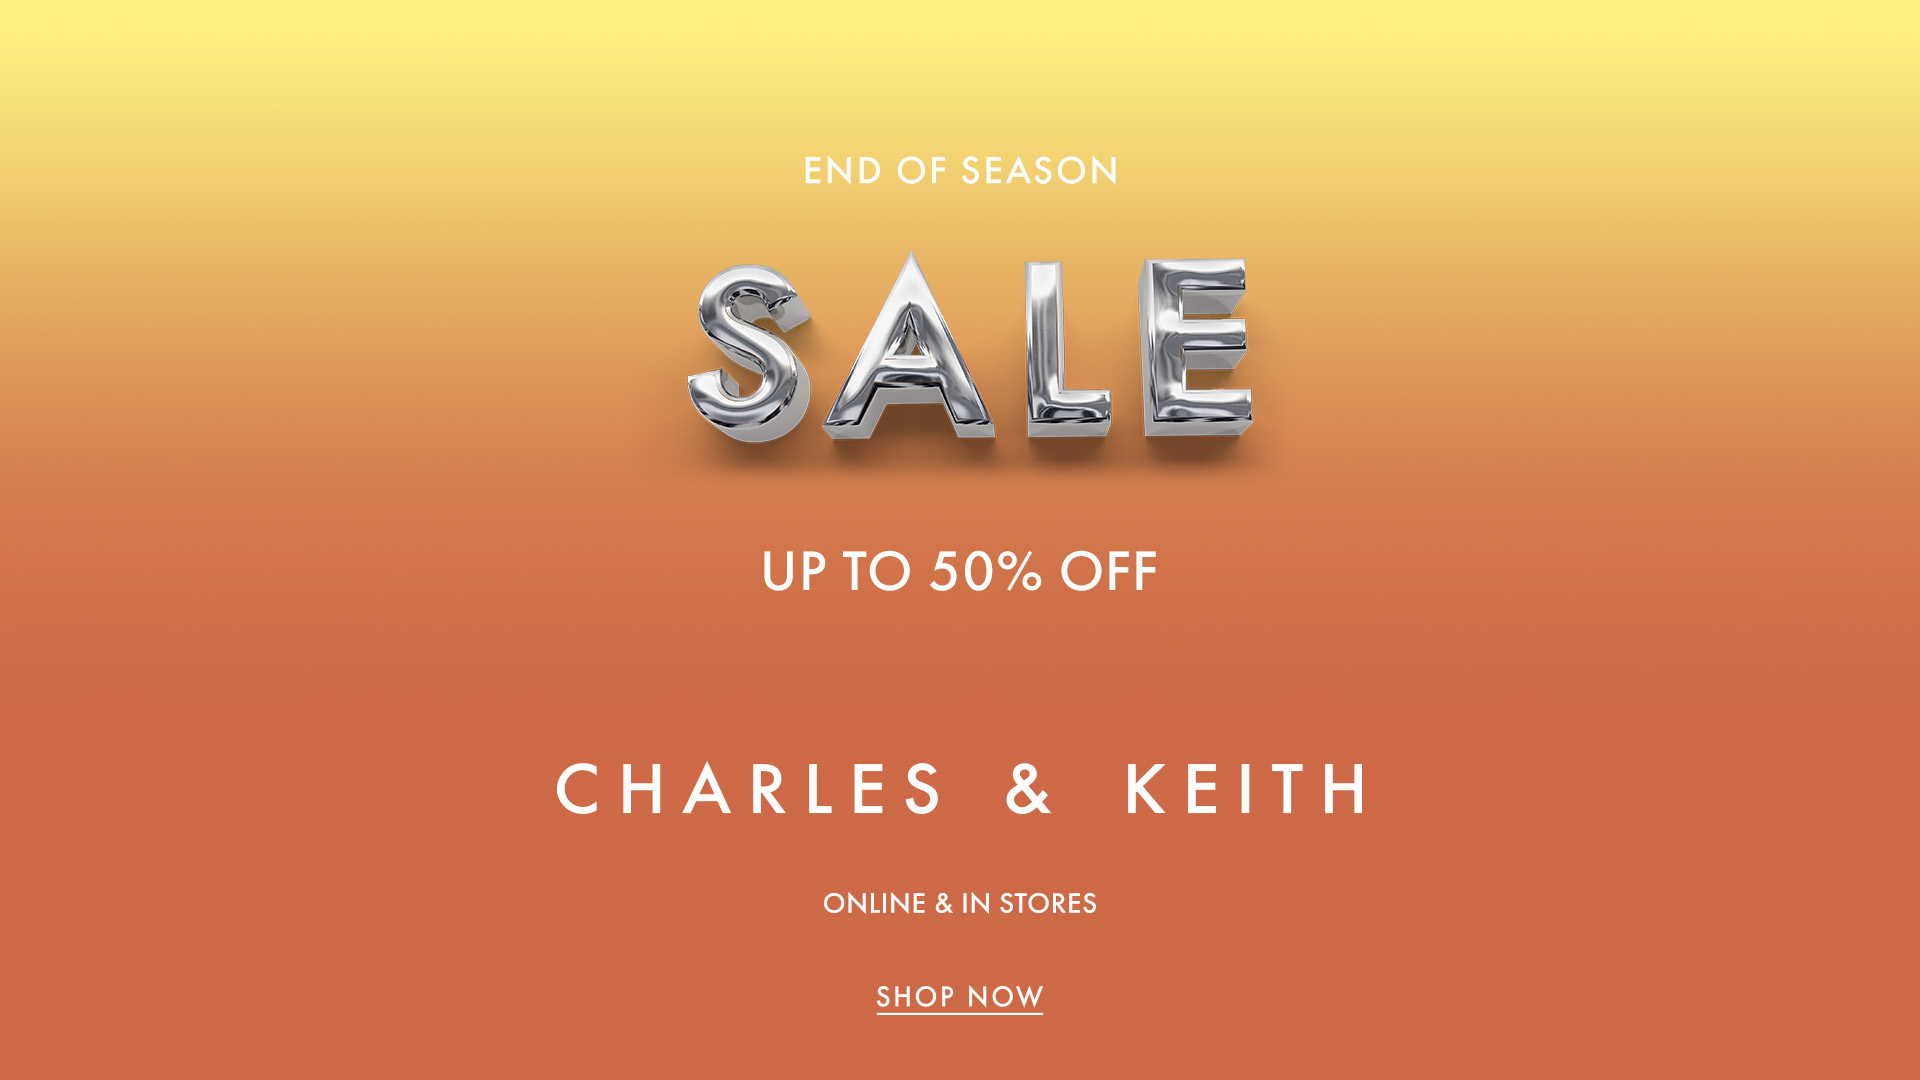 CHARLES & KEITH: END OF SEASON SALE